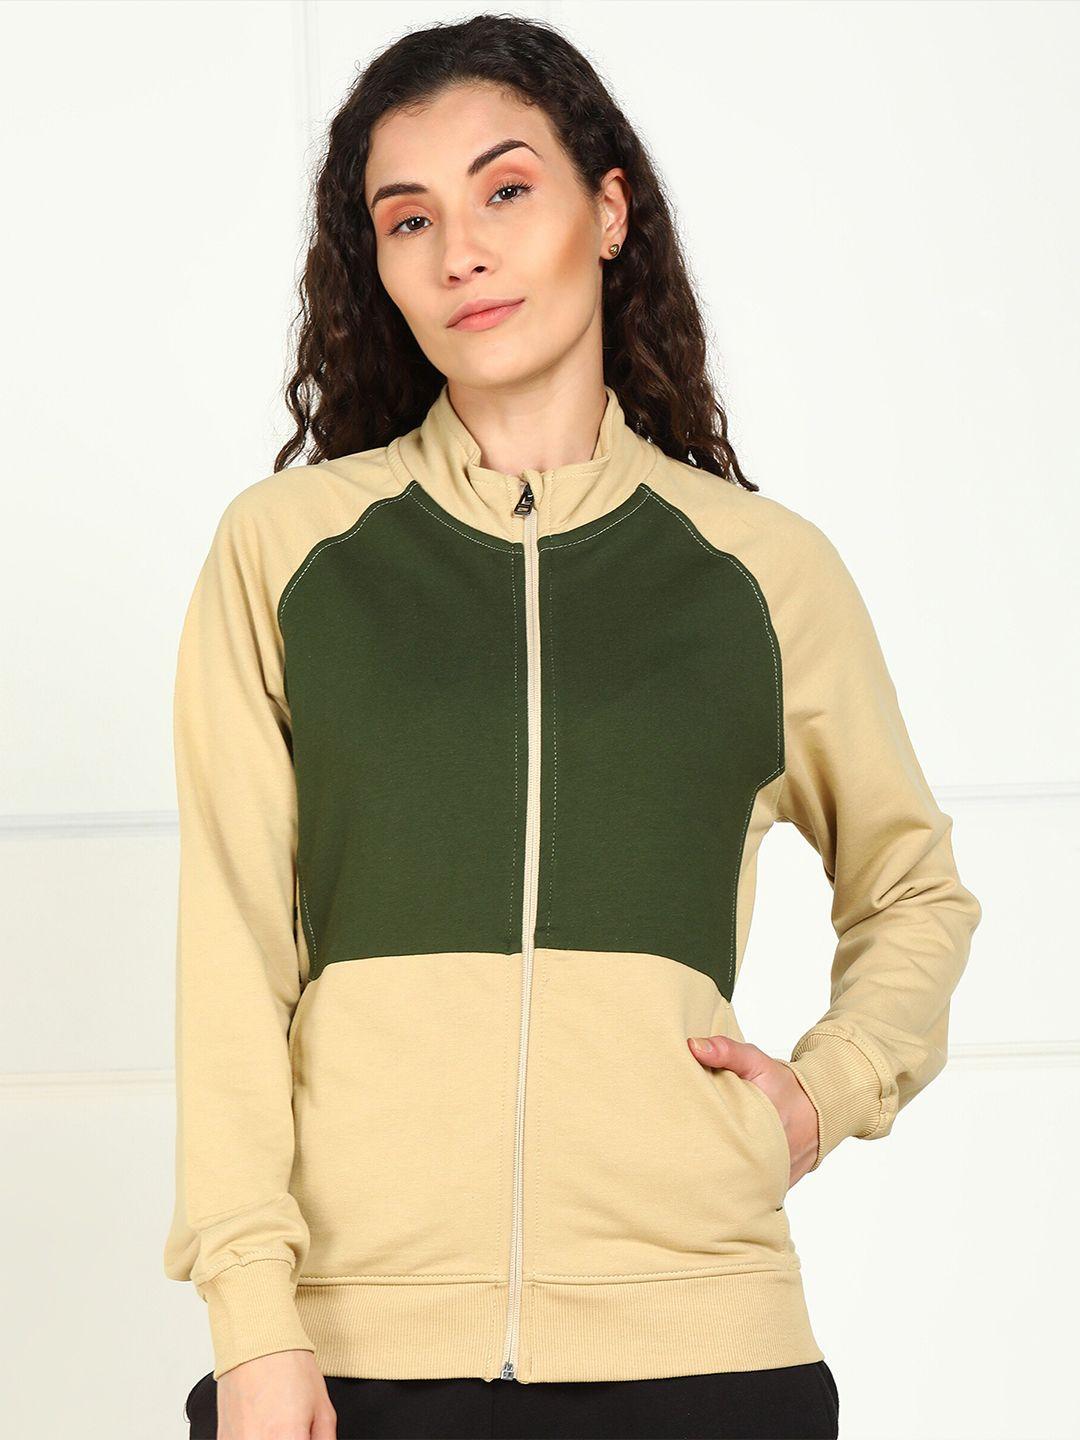 wildcraft mock collar long sleeves colourblocked cotton sweatshirt